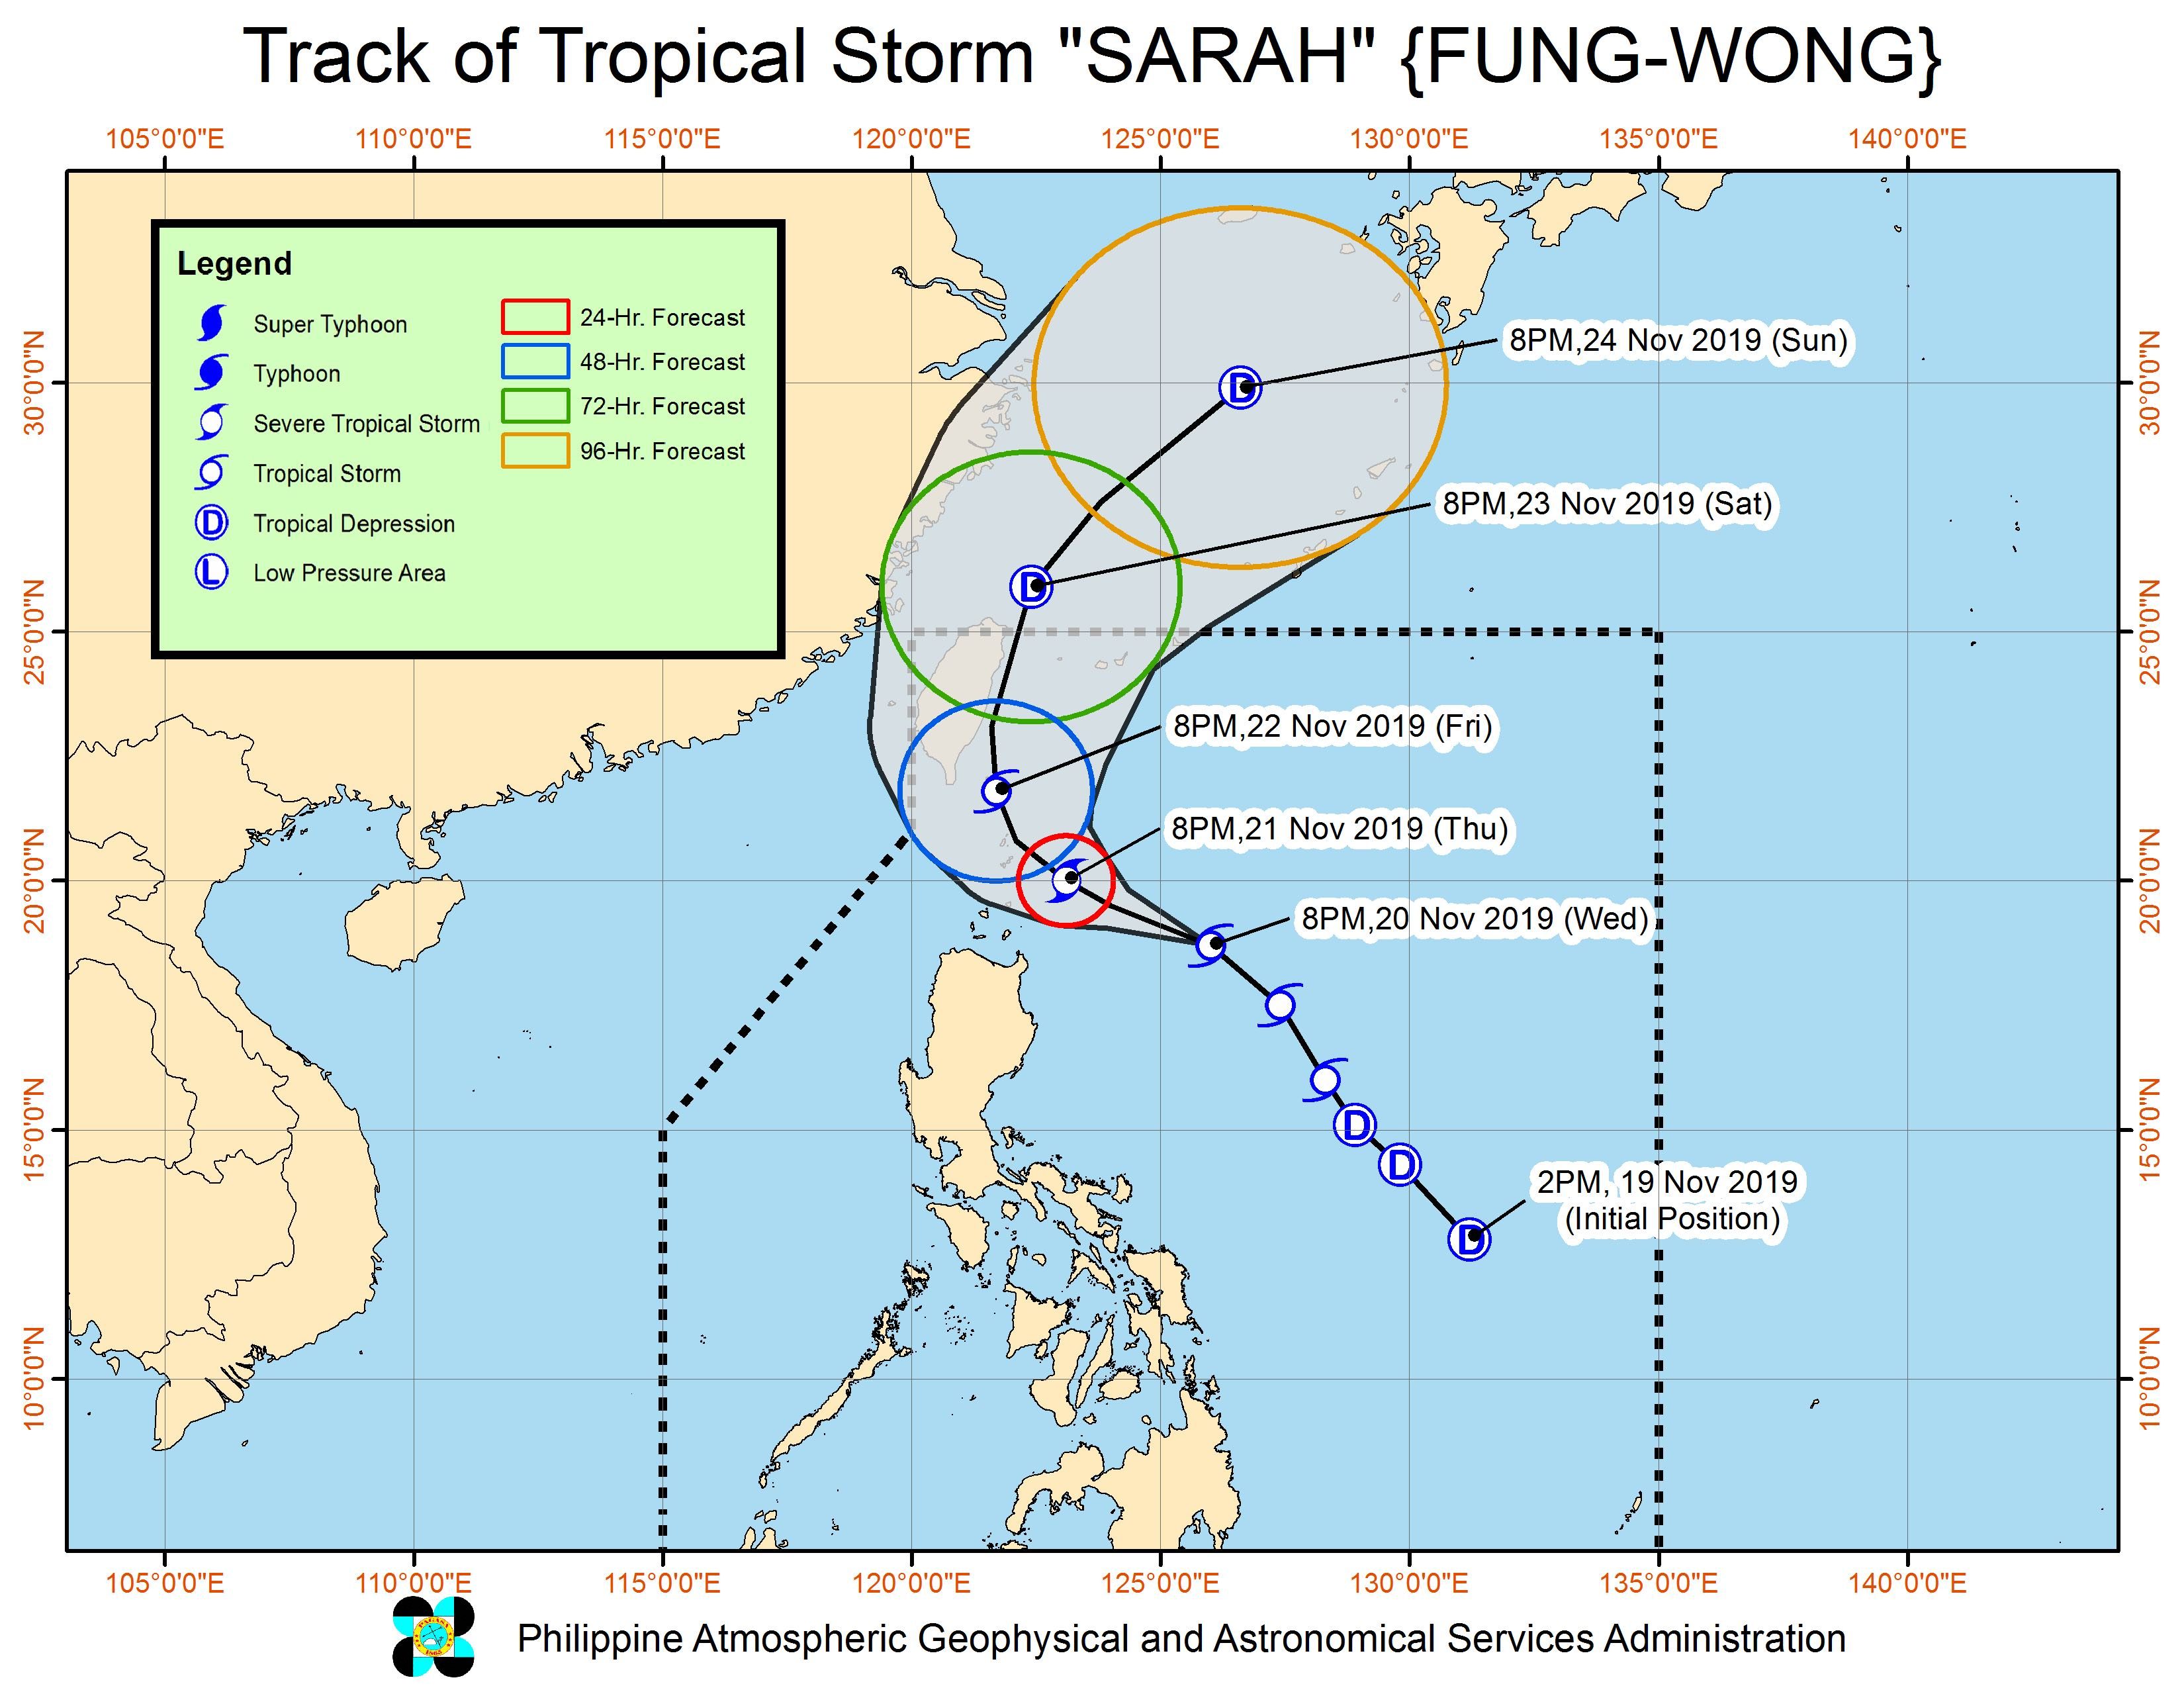 Forecast track of Tropical Storm Sarah (Fung-wong) as of November 20, 2019, 11 pm. Image from PAGASA 